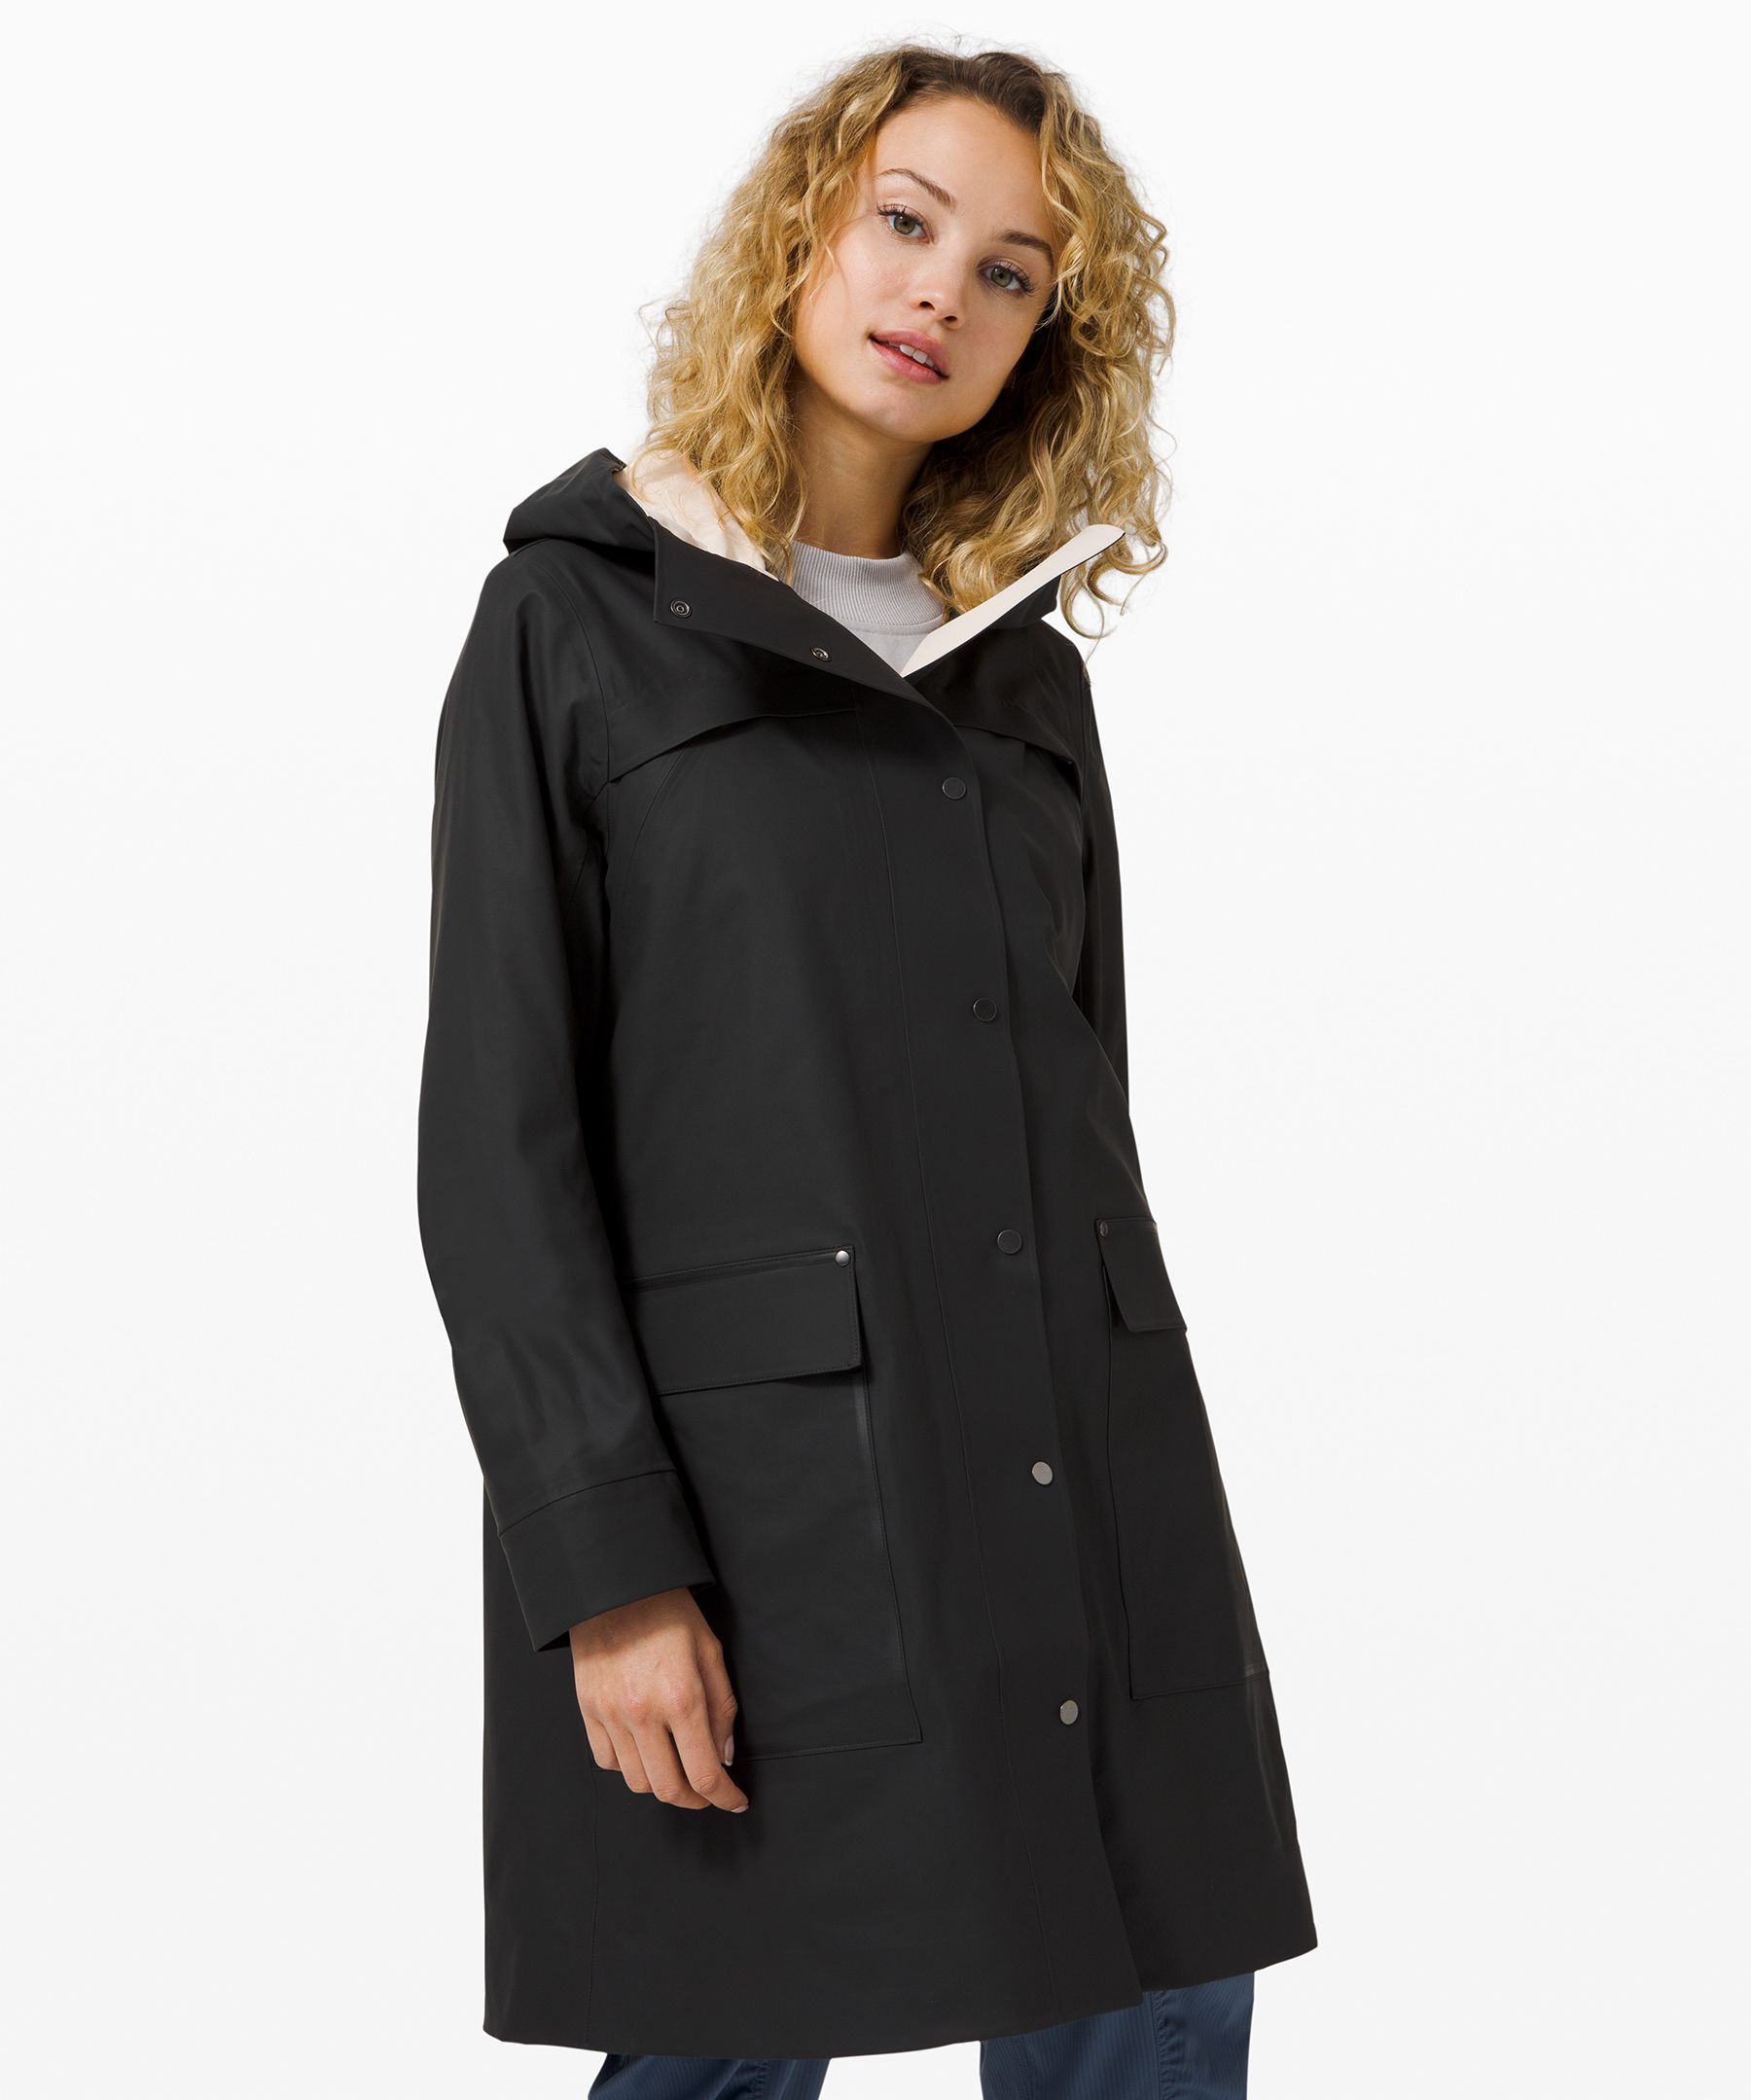 Into the Drizzle Jacket | Women's Coats & Jackets | lululemon